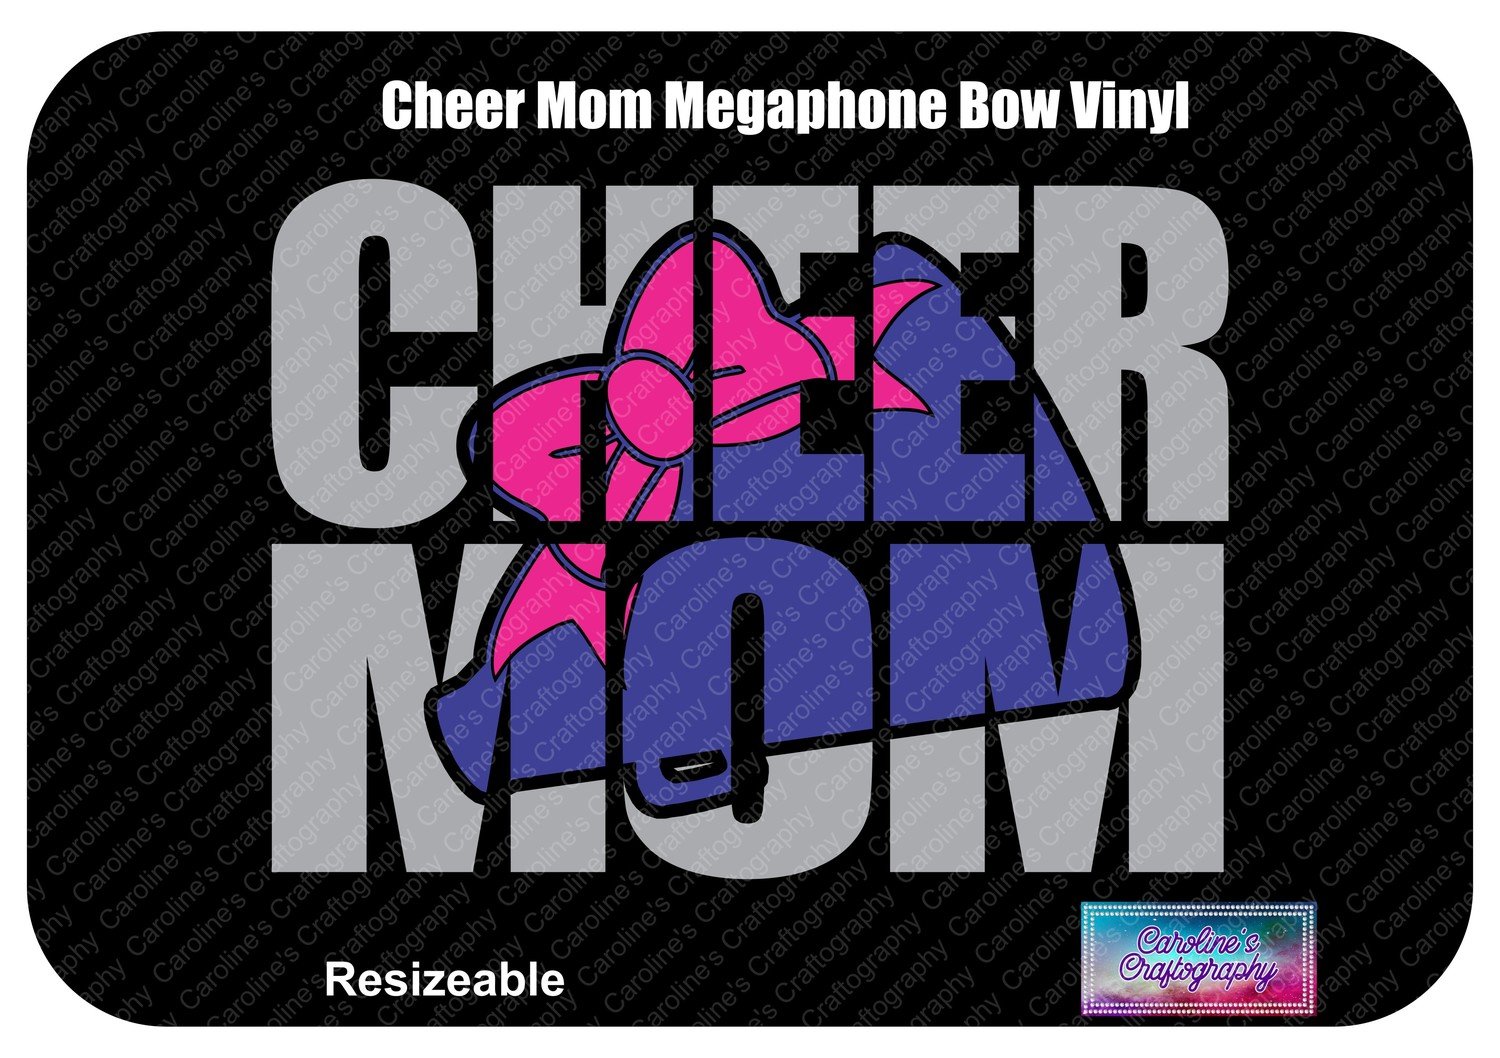 Cheer Mom Megaphone Bow